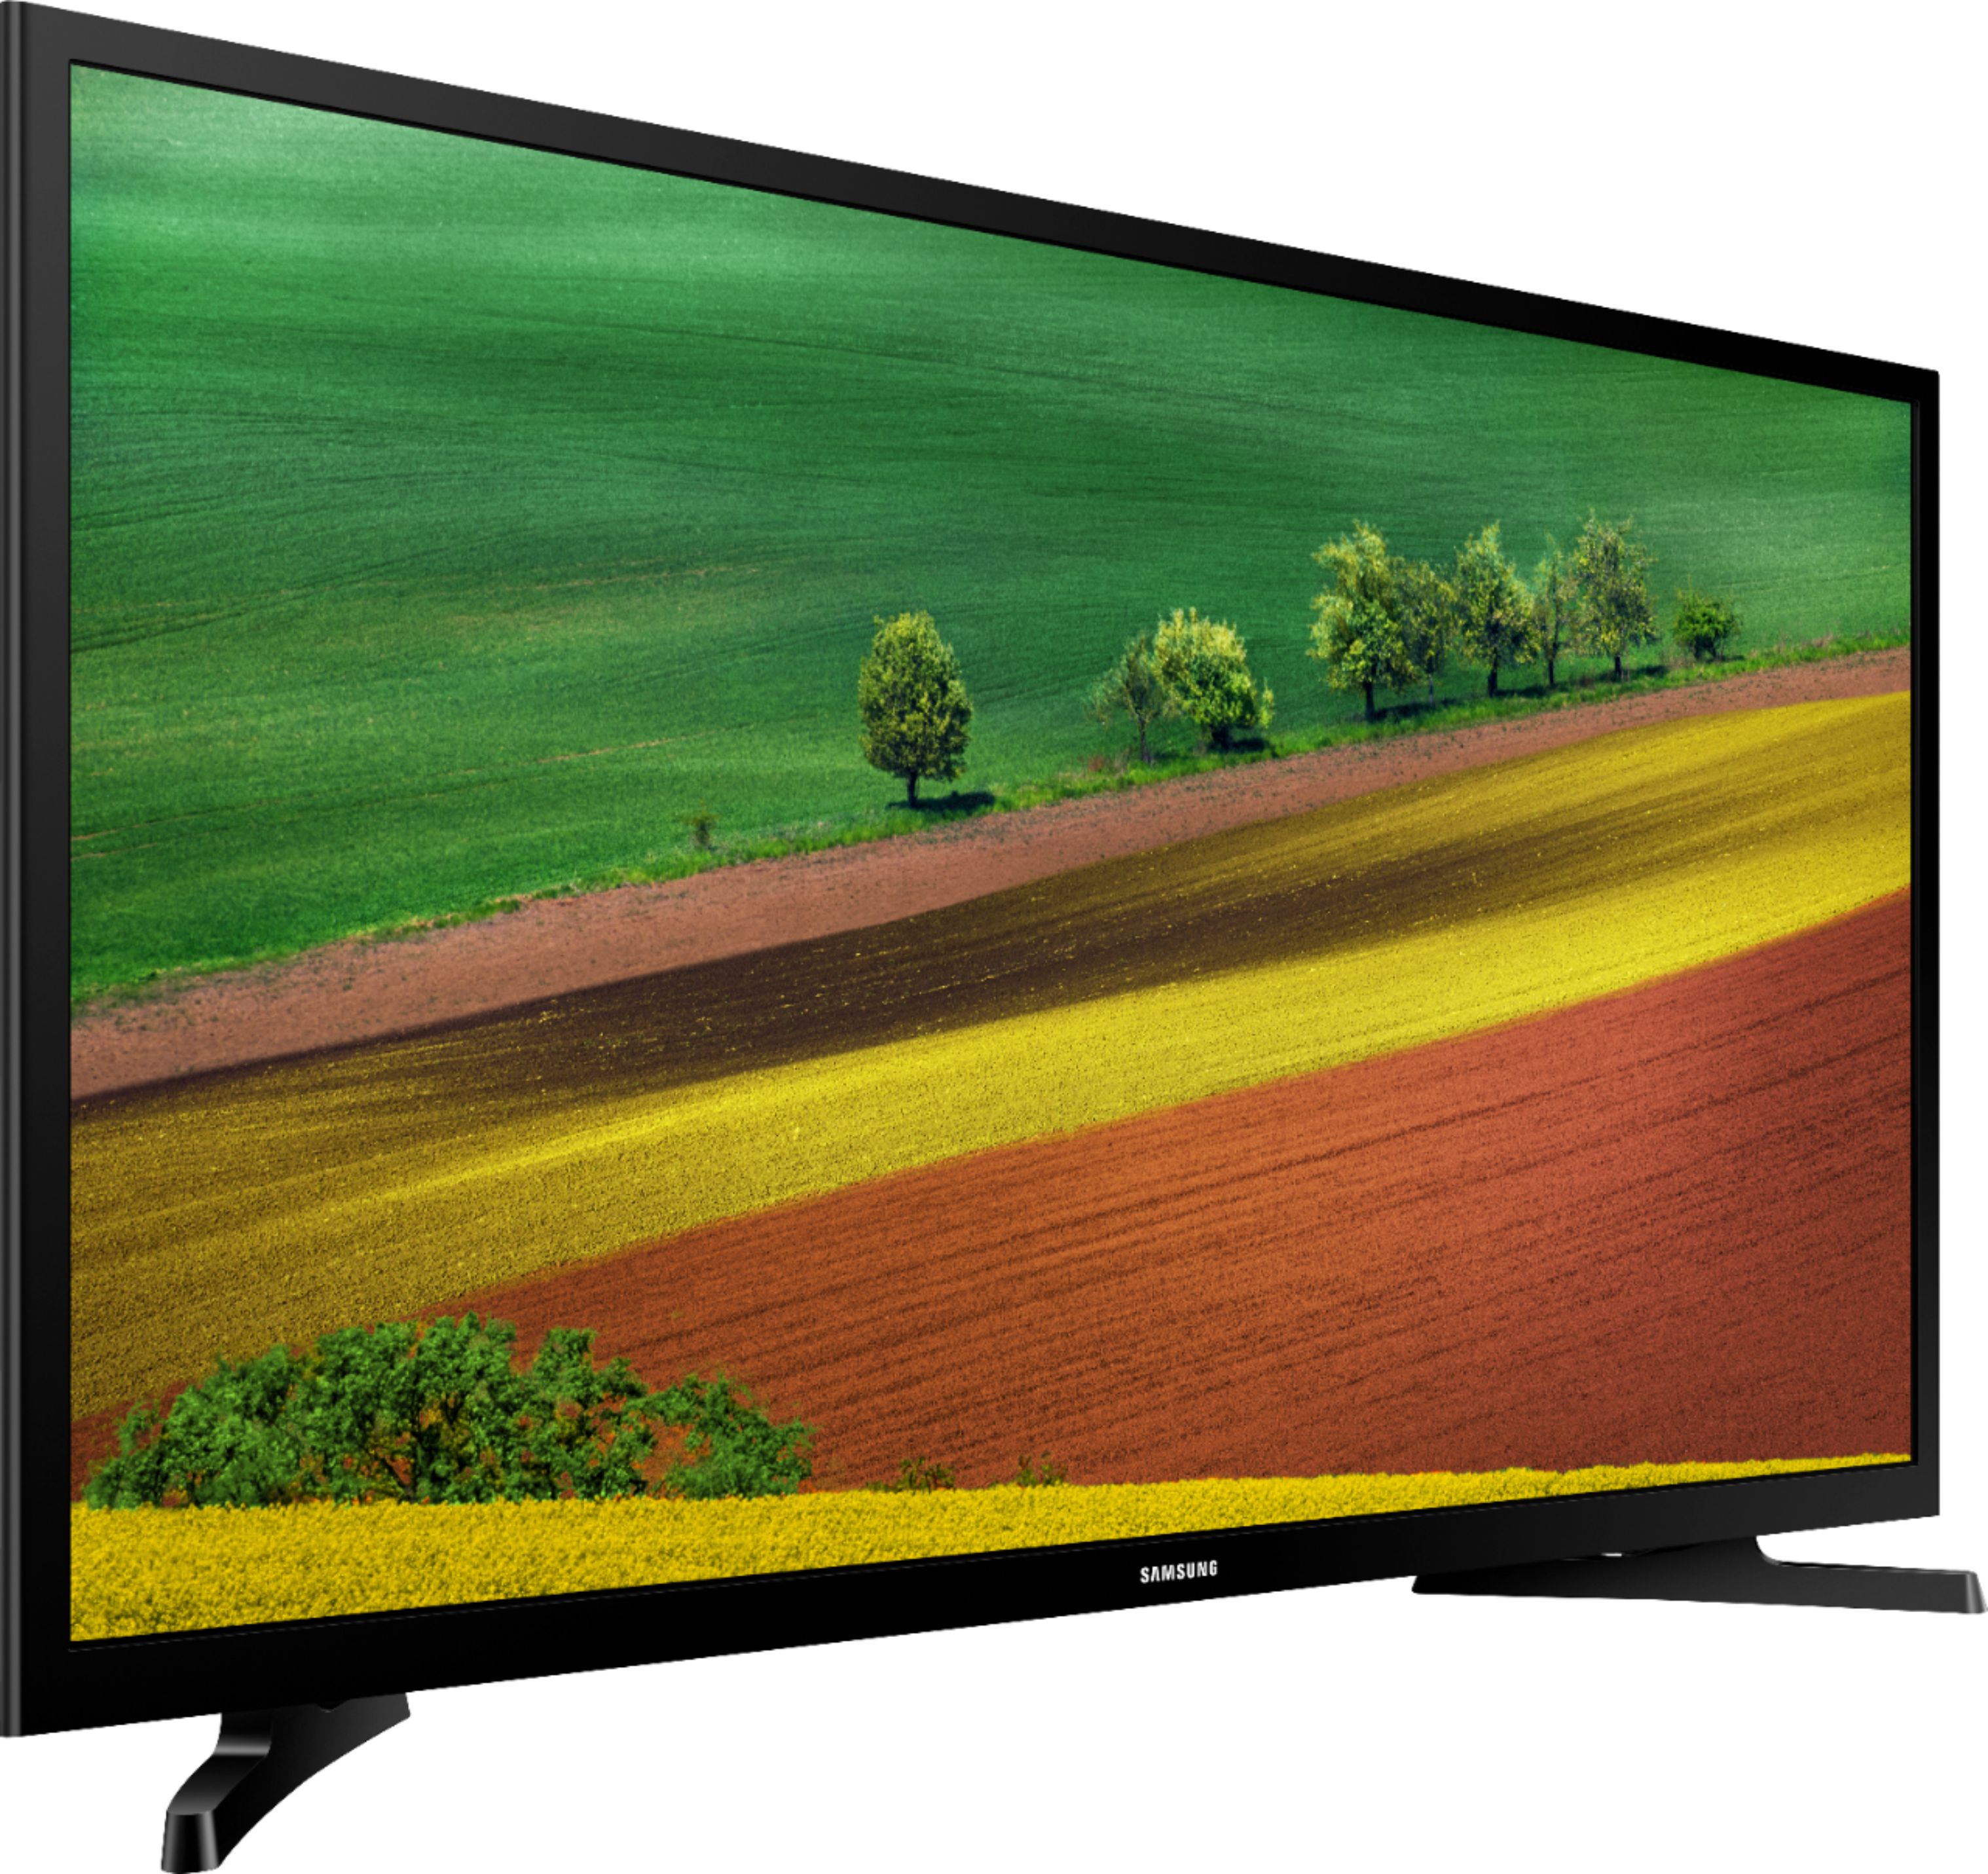 Angle View: Samsung - 32" Class M4500 Series LED HD Smart Tizen TV